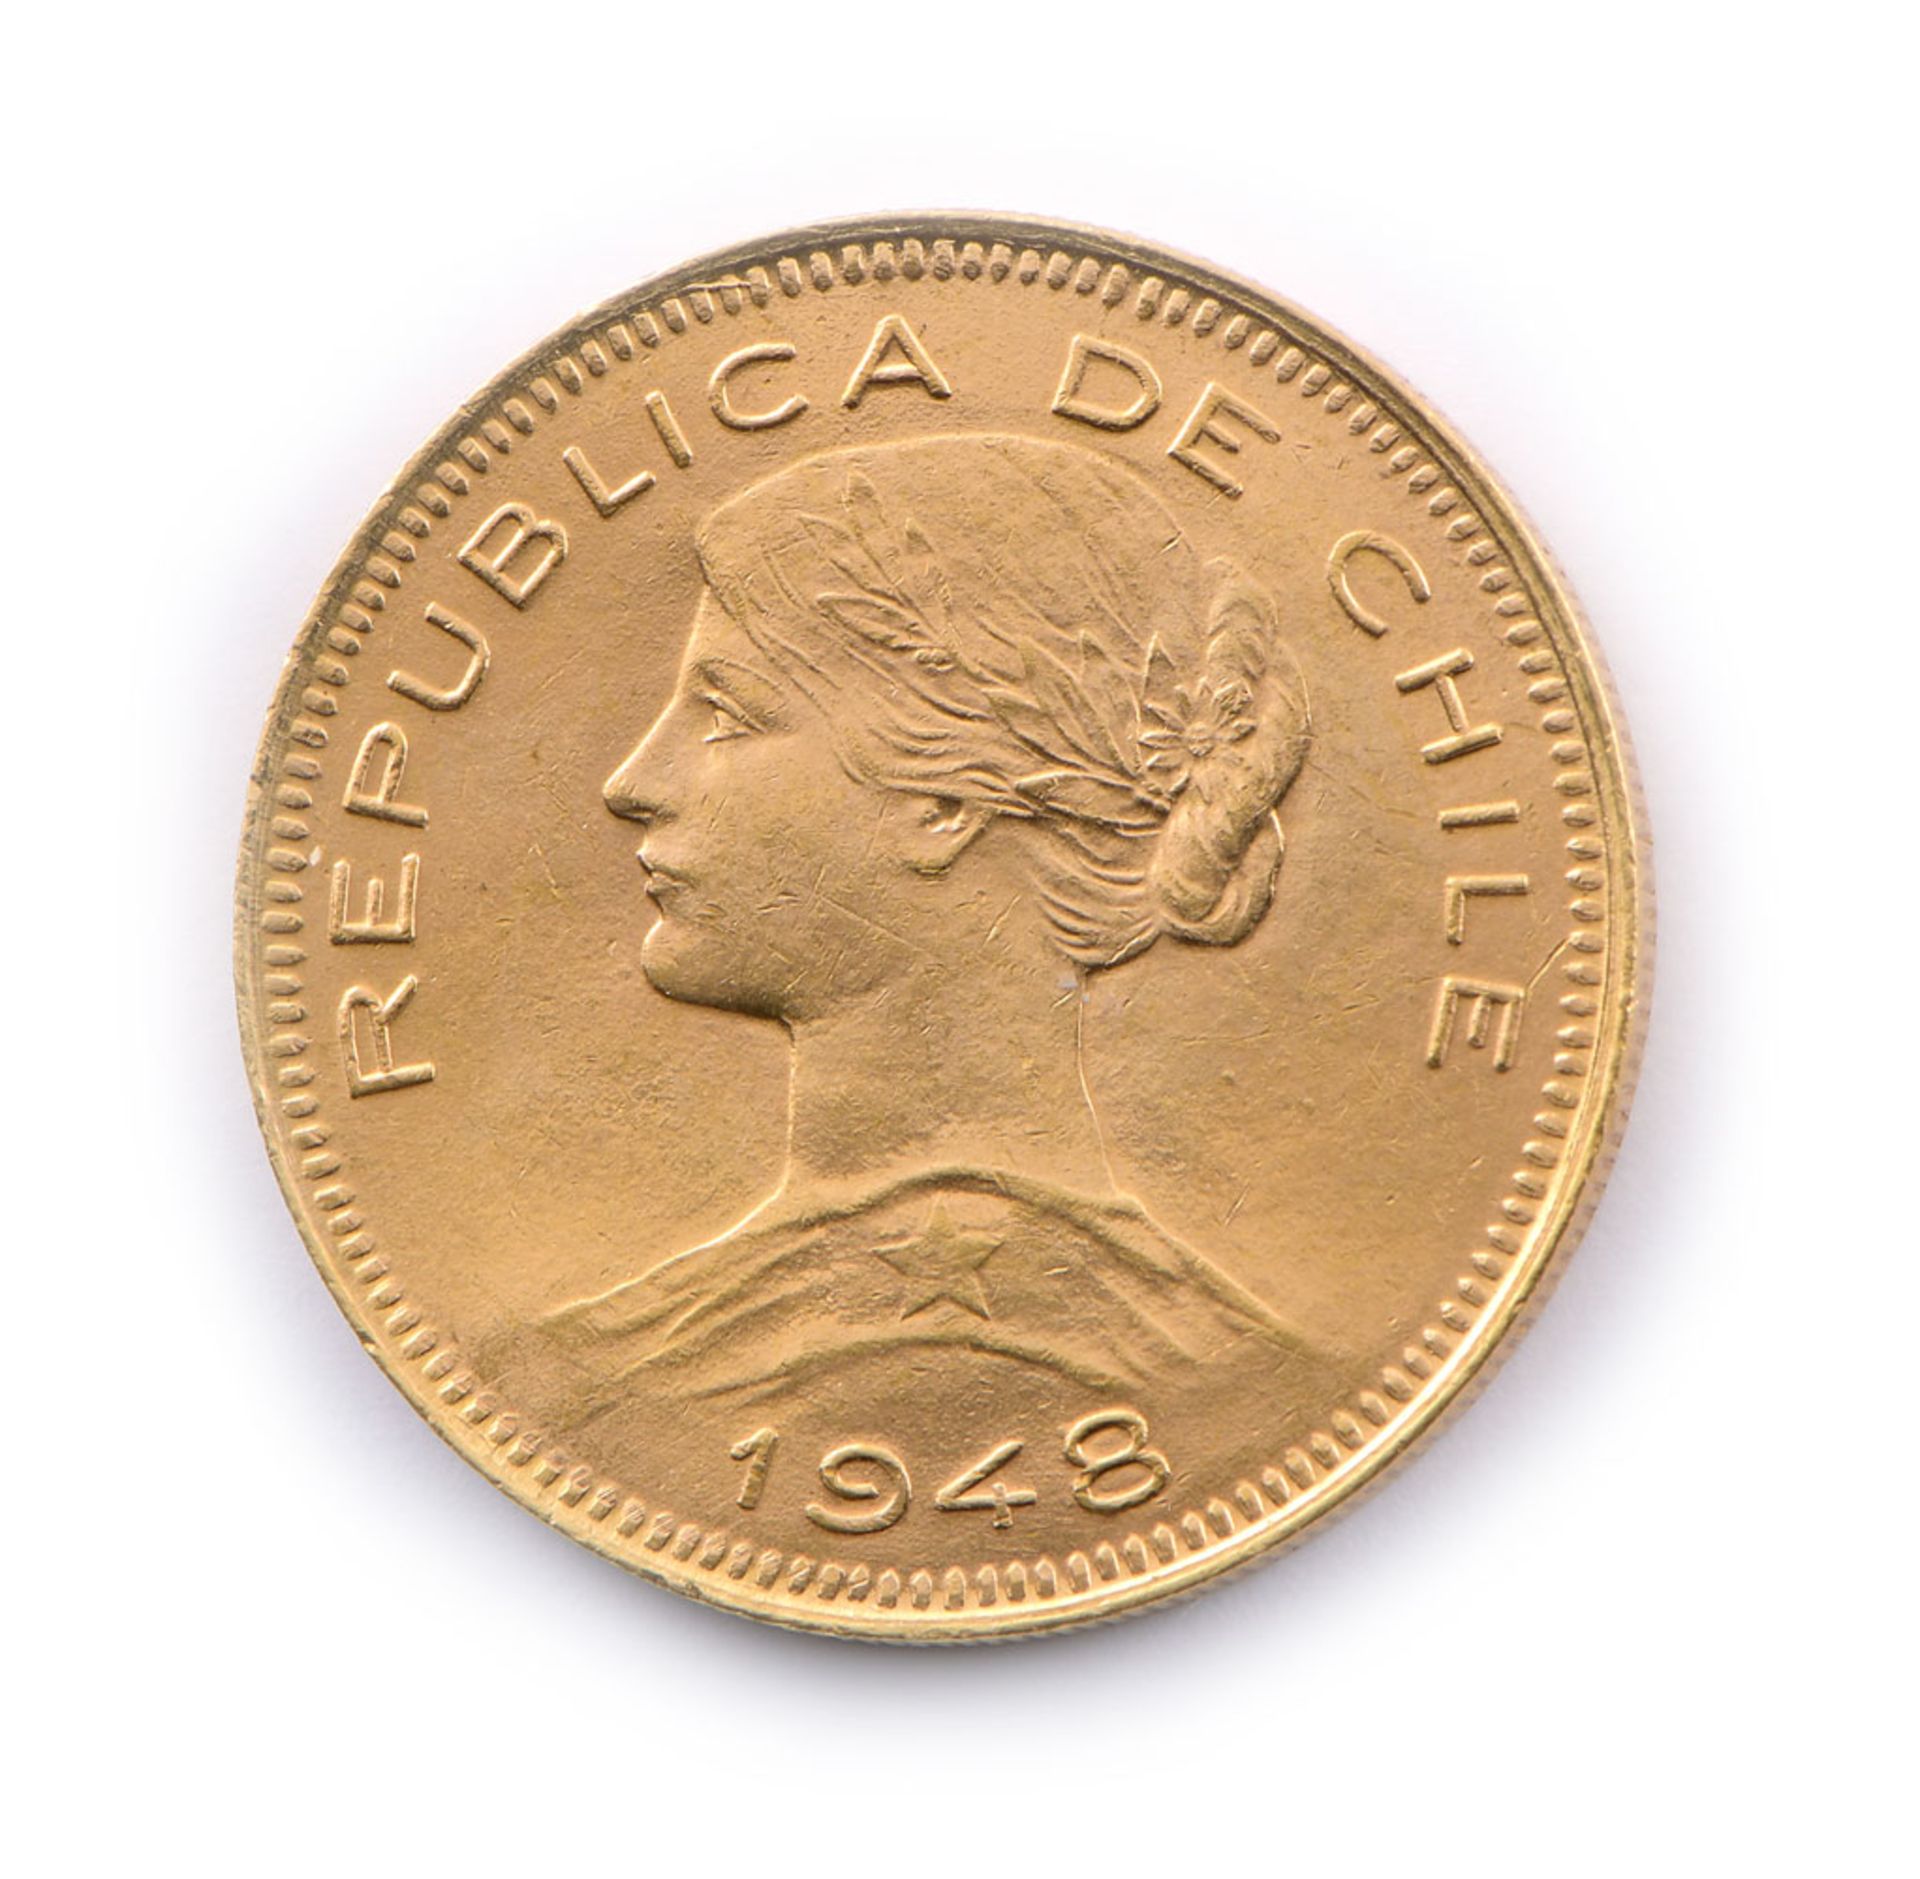 Goldmünze, Republica de Chile 1948